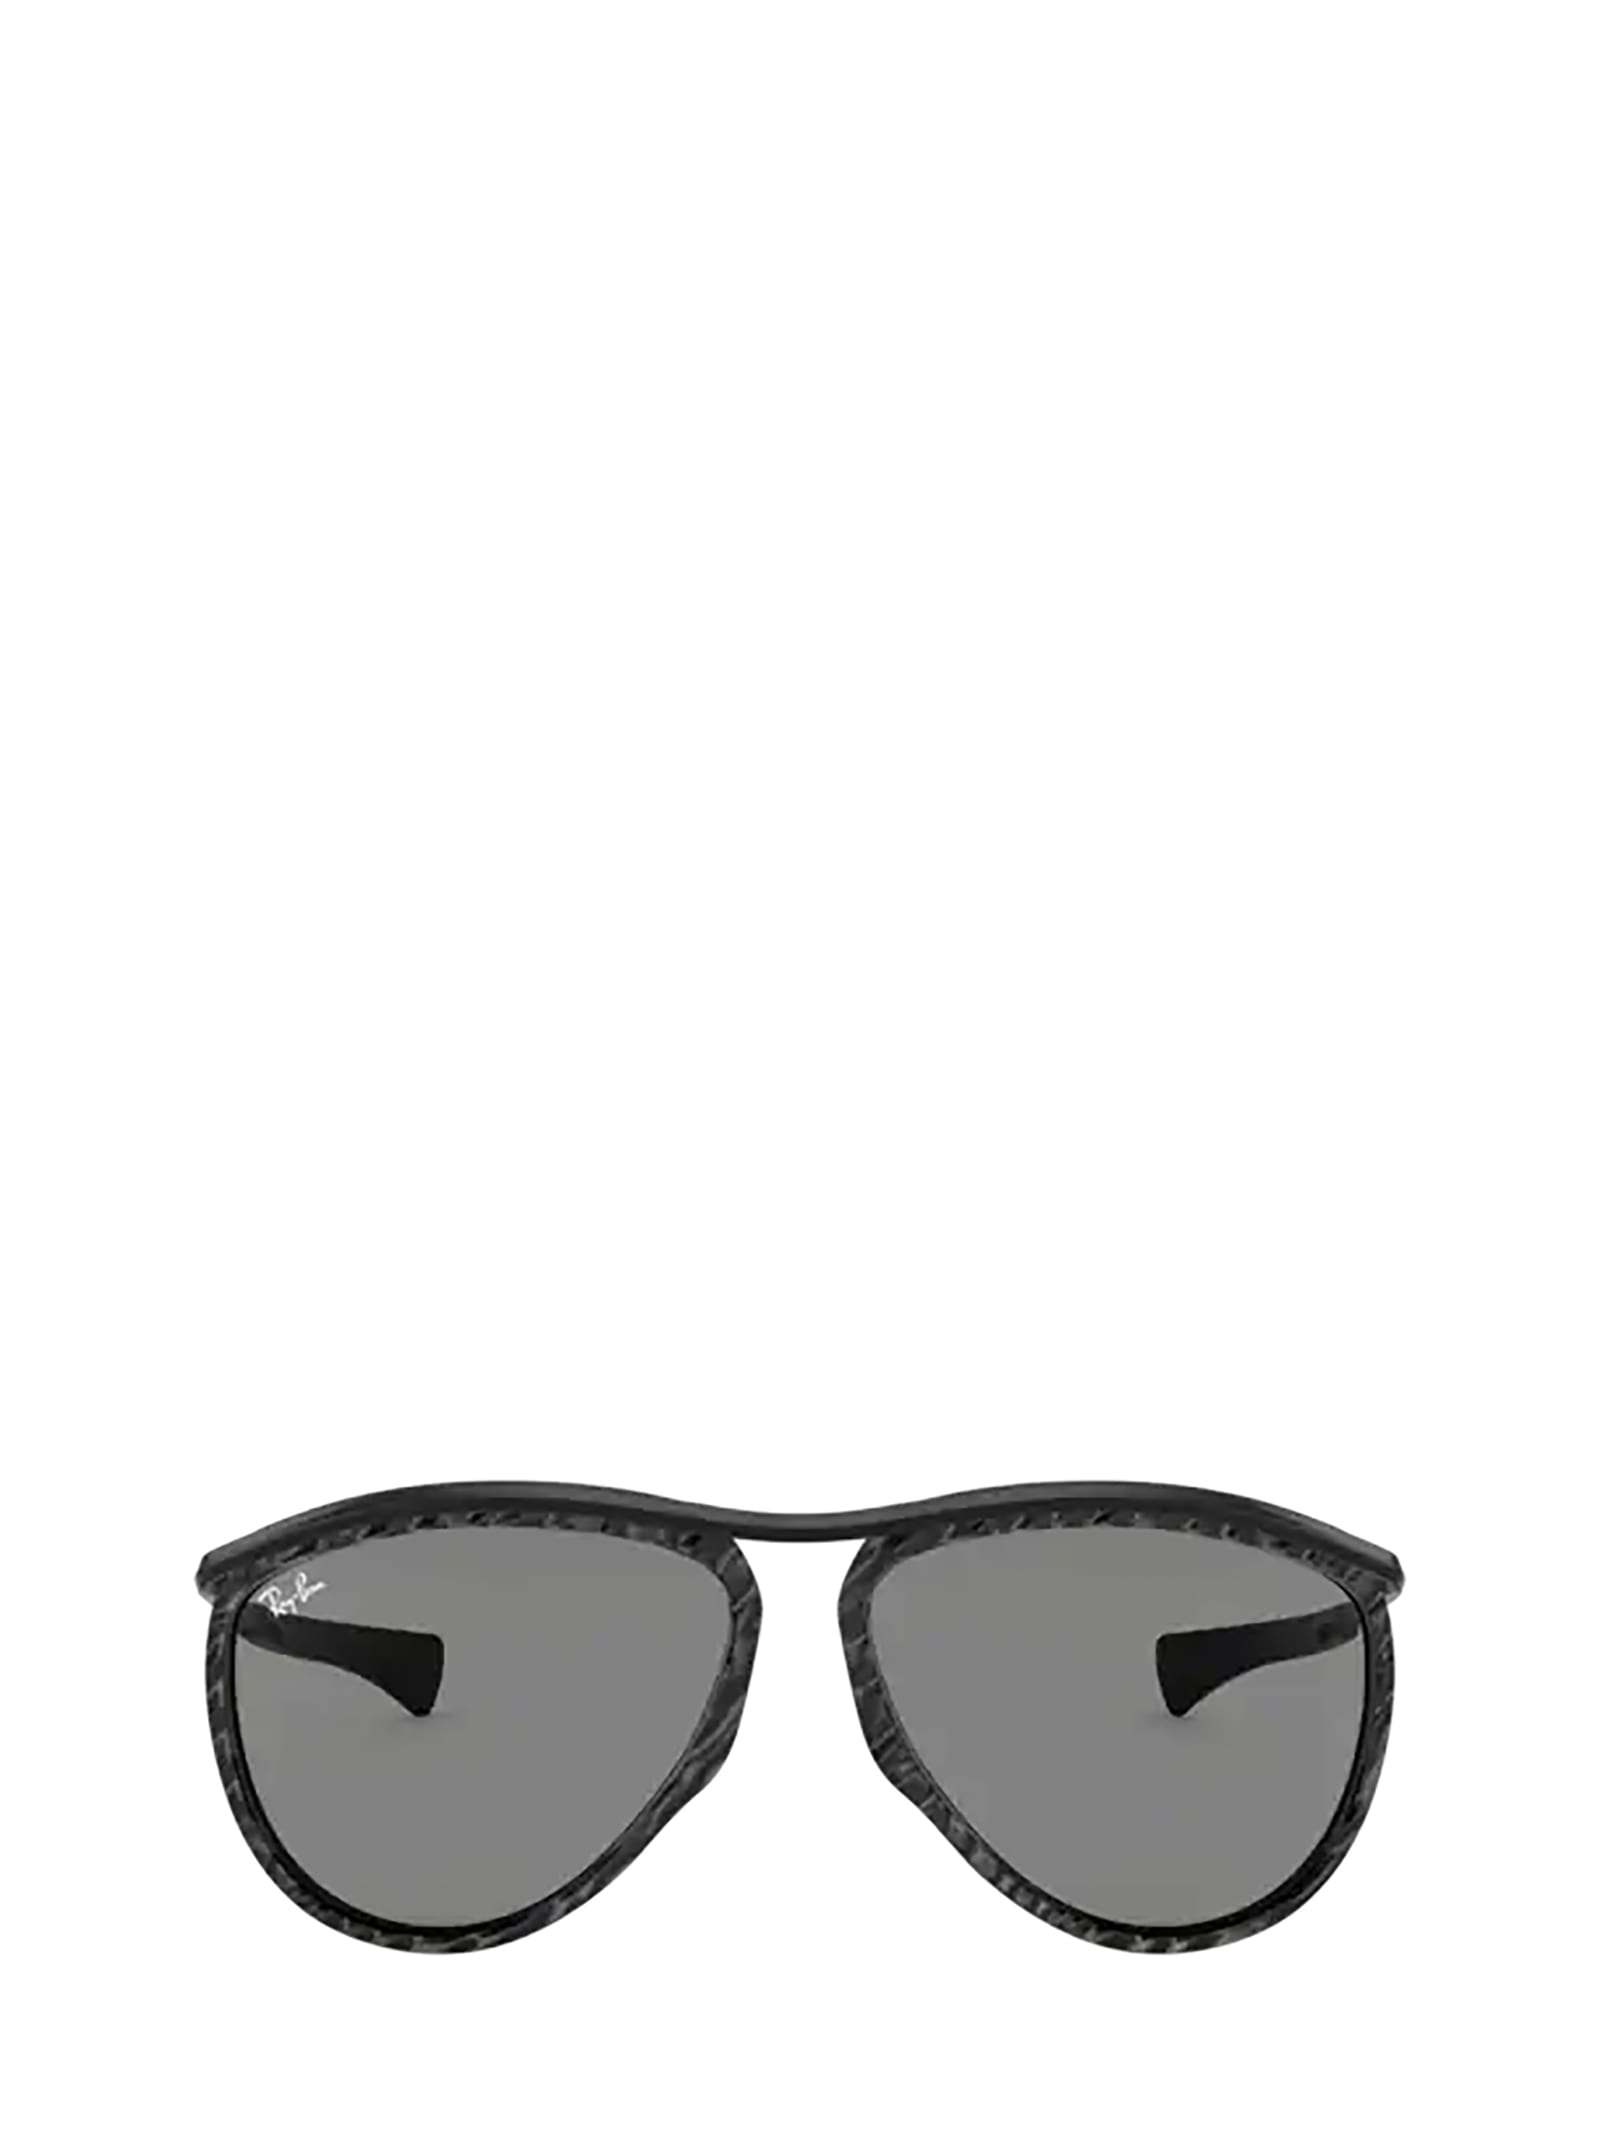 Ray-Ban Ray-ban Rb2219 Wrinkled Black On Black Sunglasses